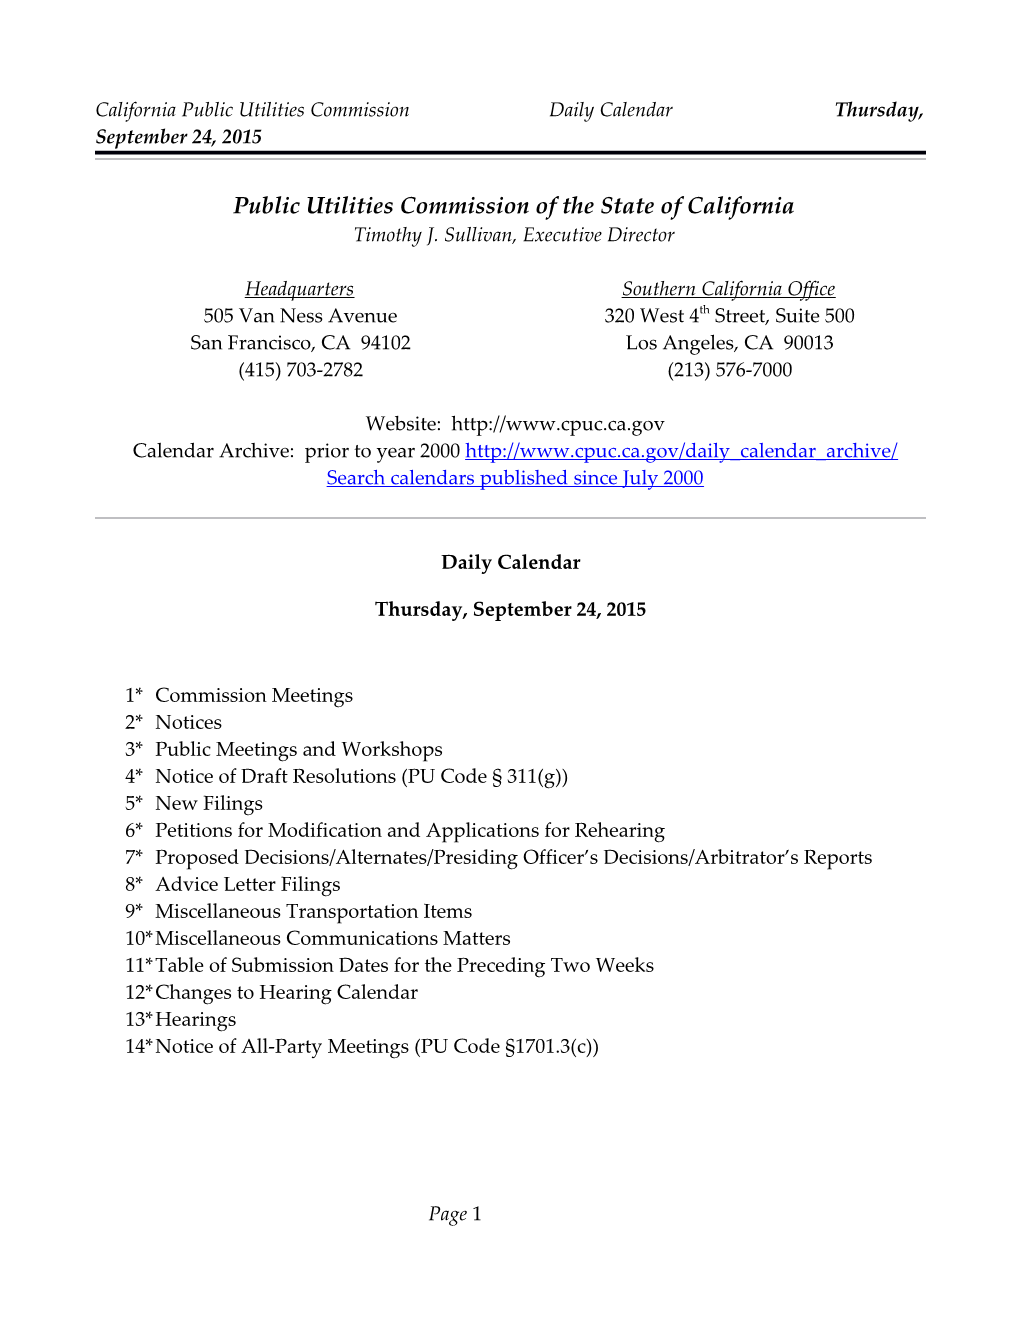 California Public Utilities Commission Daily Calendar Thursday, September 24, 2015